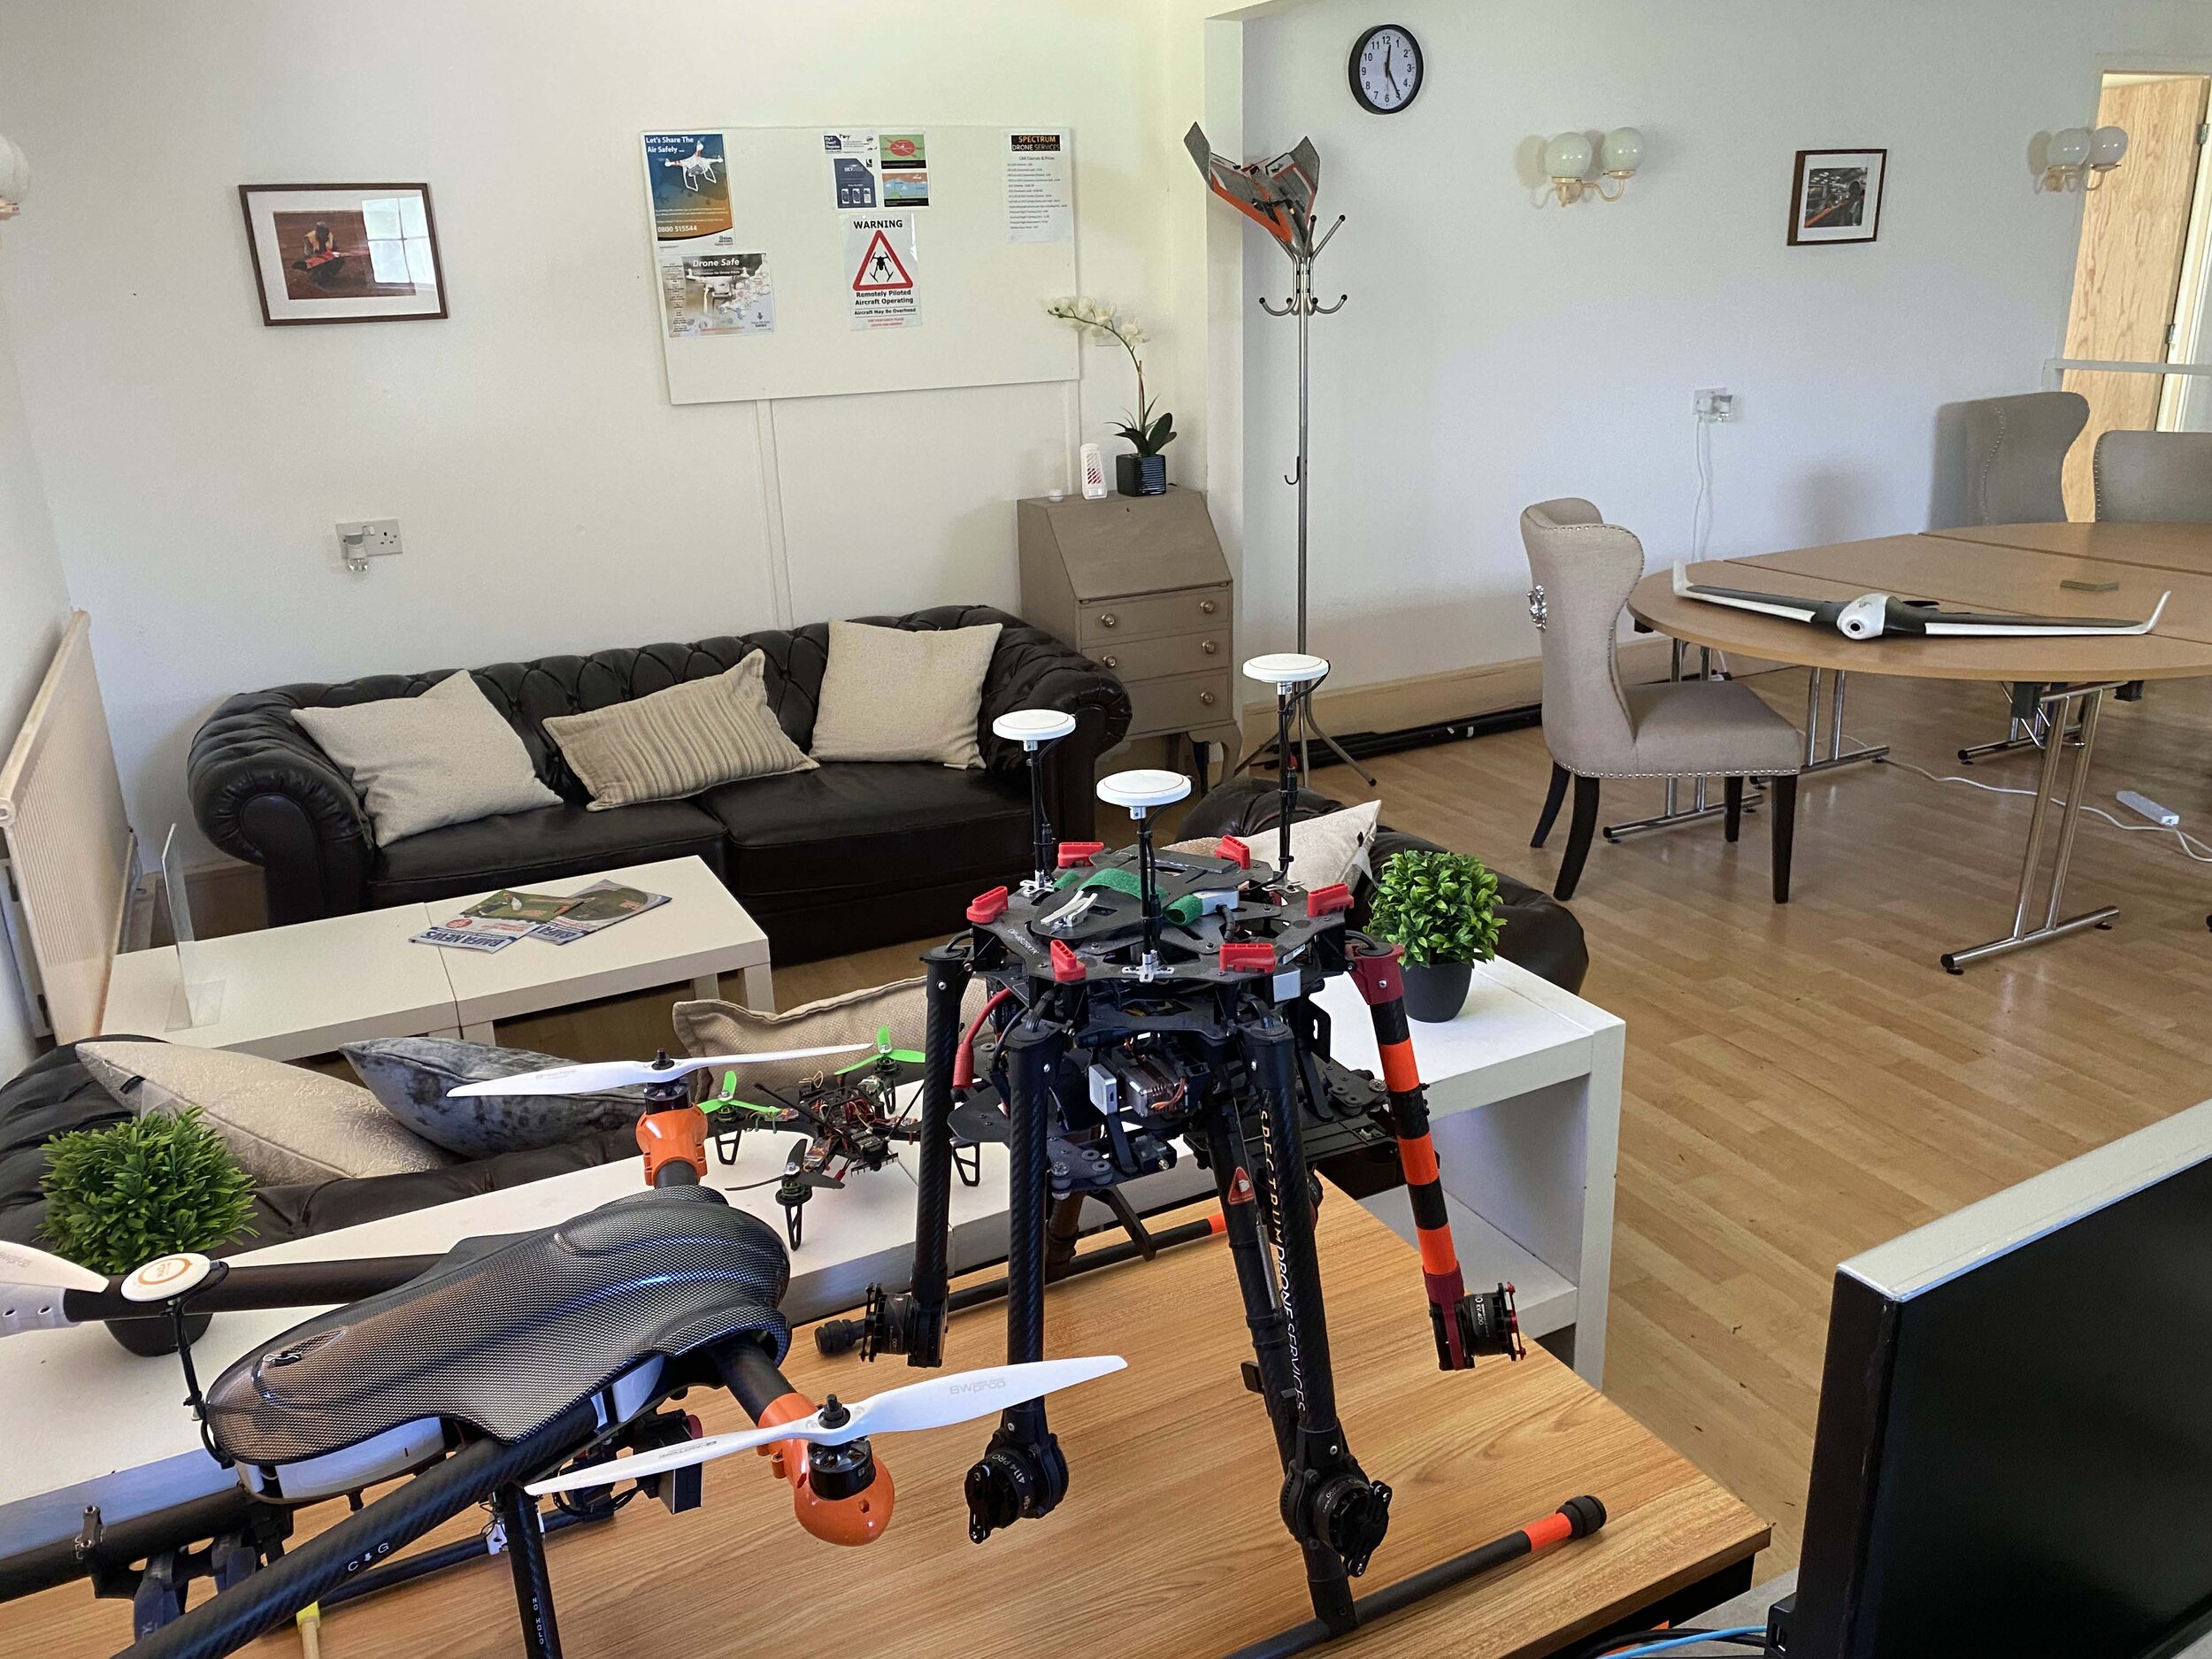 spectrum-drone-services-training-room-1c.jpg